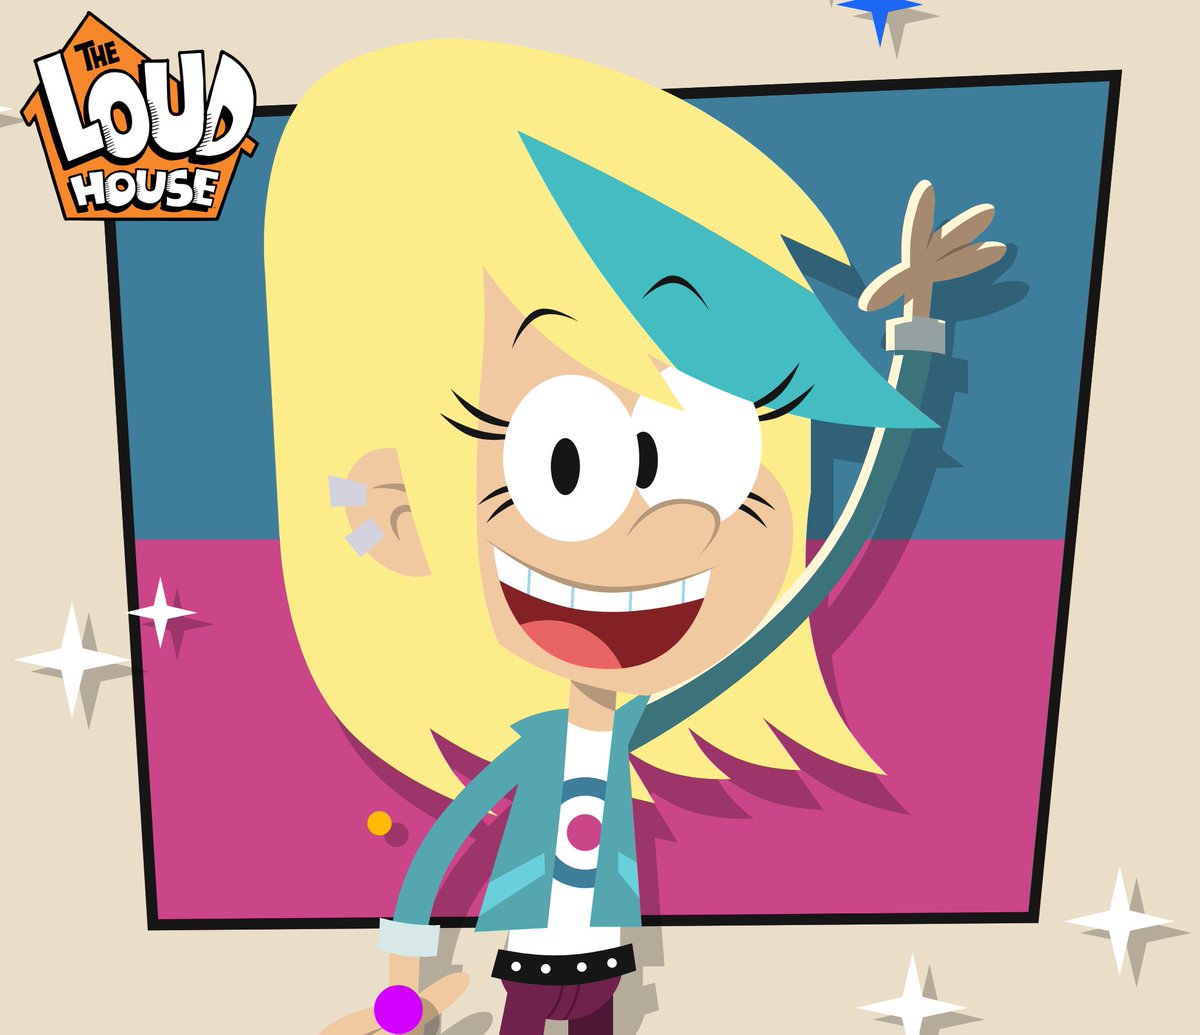 More Sam 💙
#SamSharp #TheLoudHouse #Nickelodeon #fanart